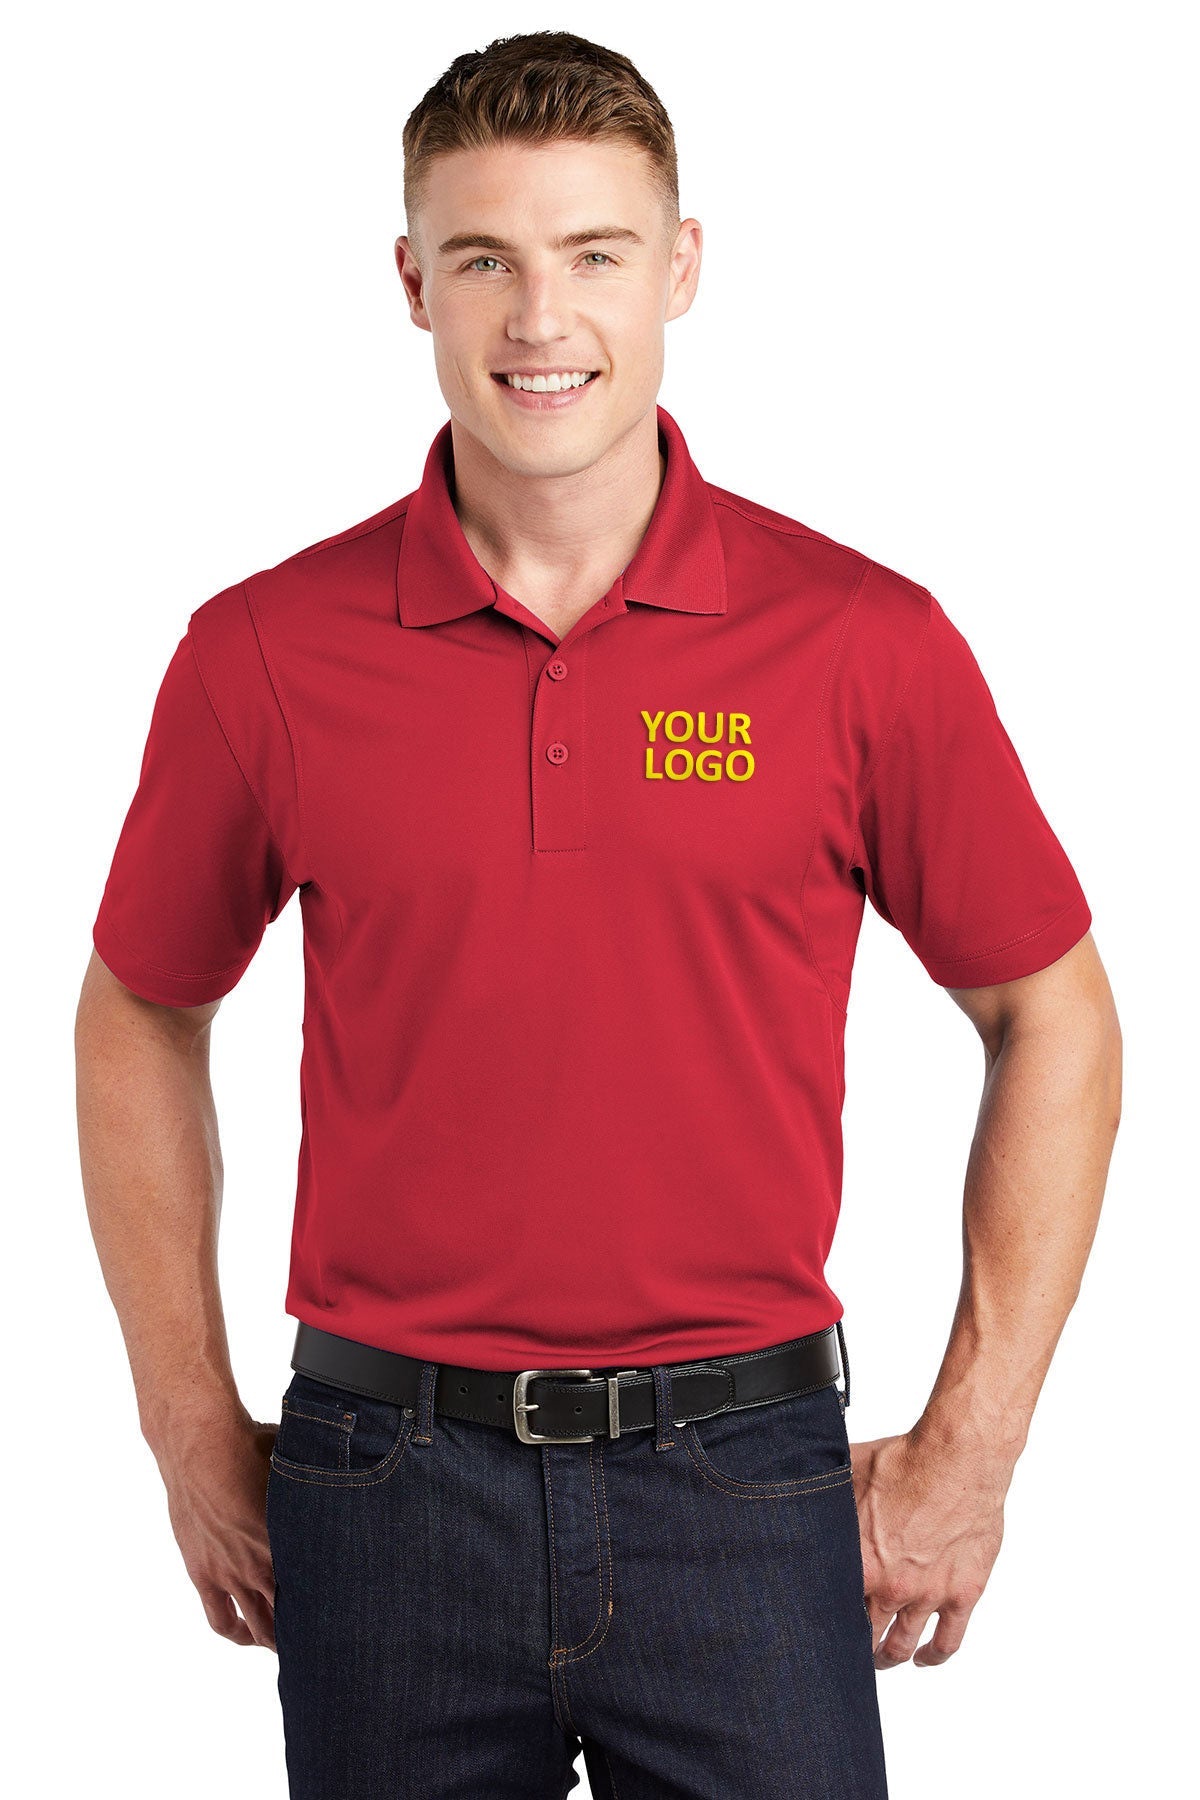 Sport-Tek True Red ST650 custom logo polo shirts embroidered